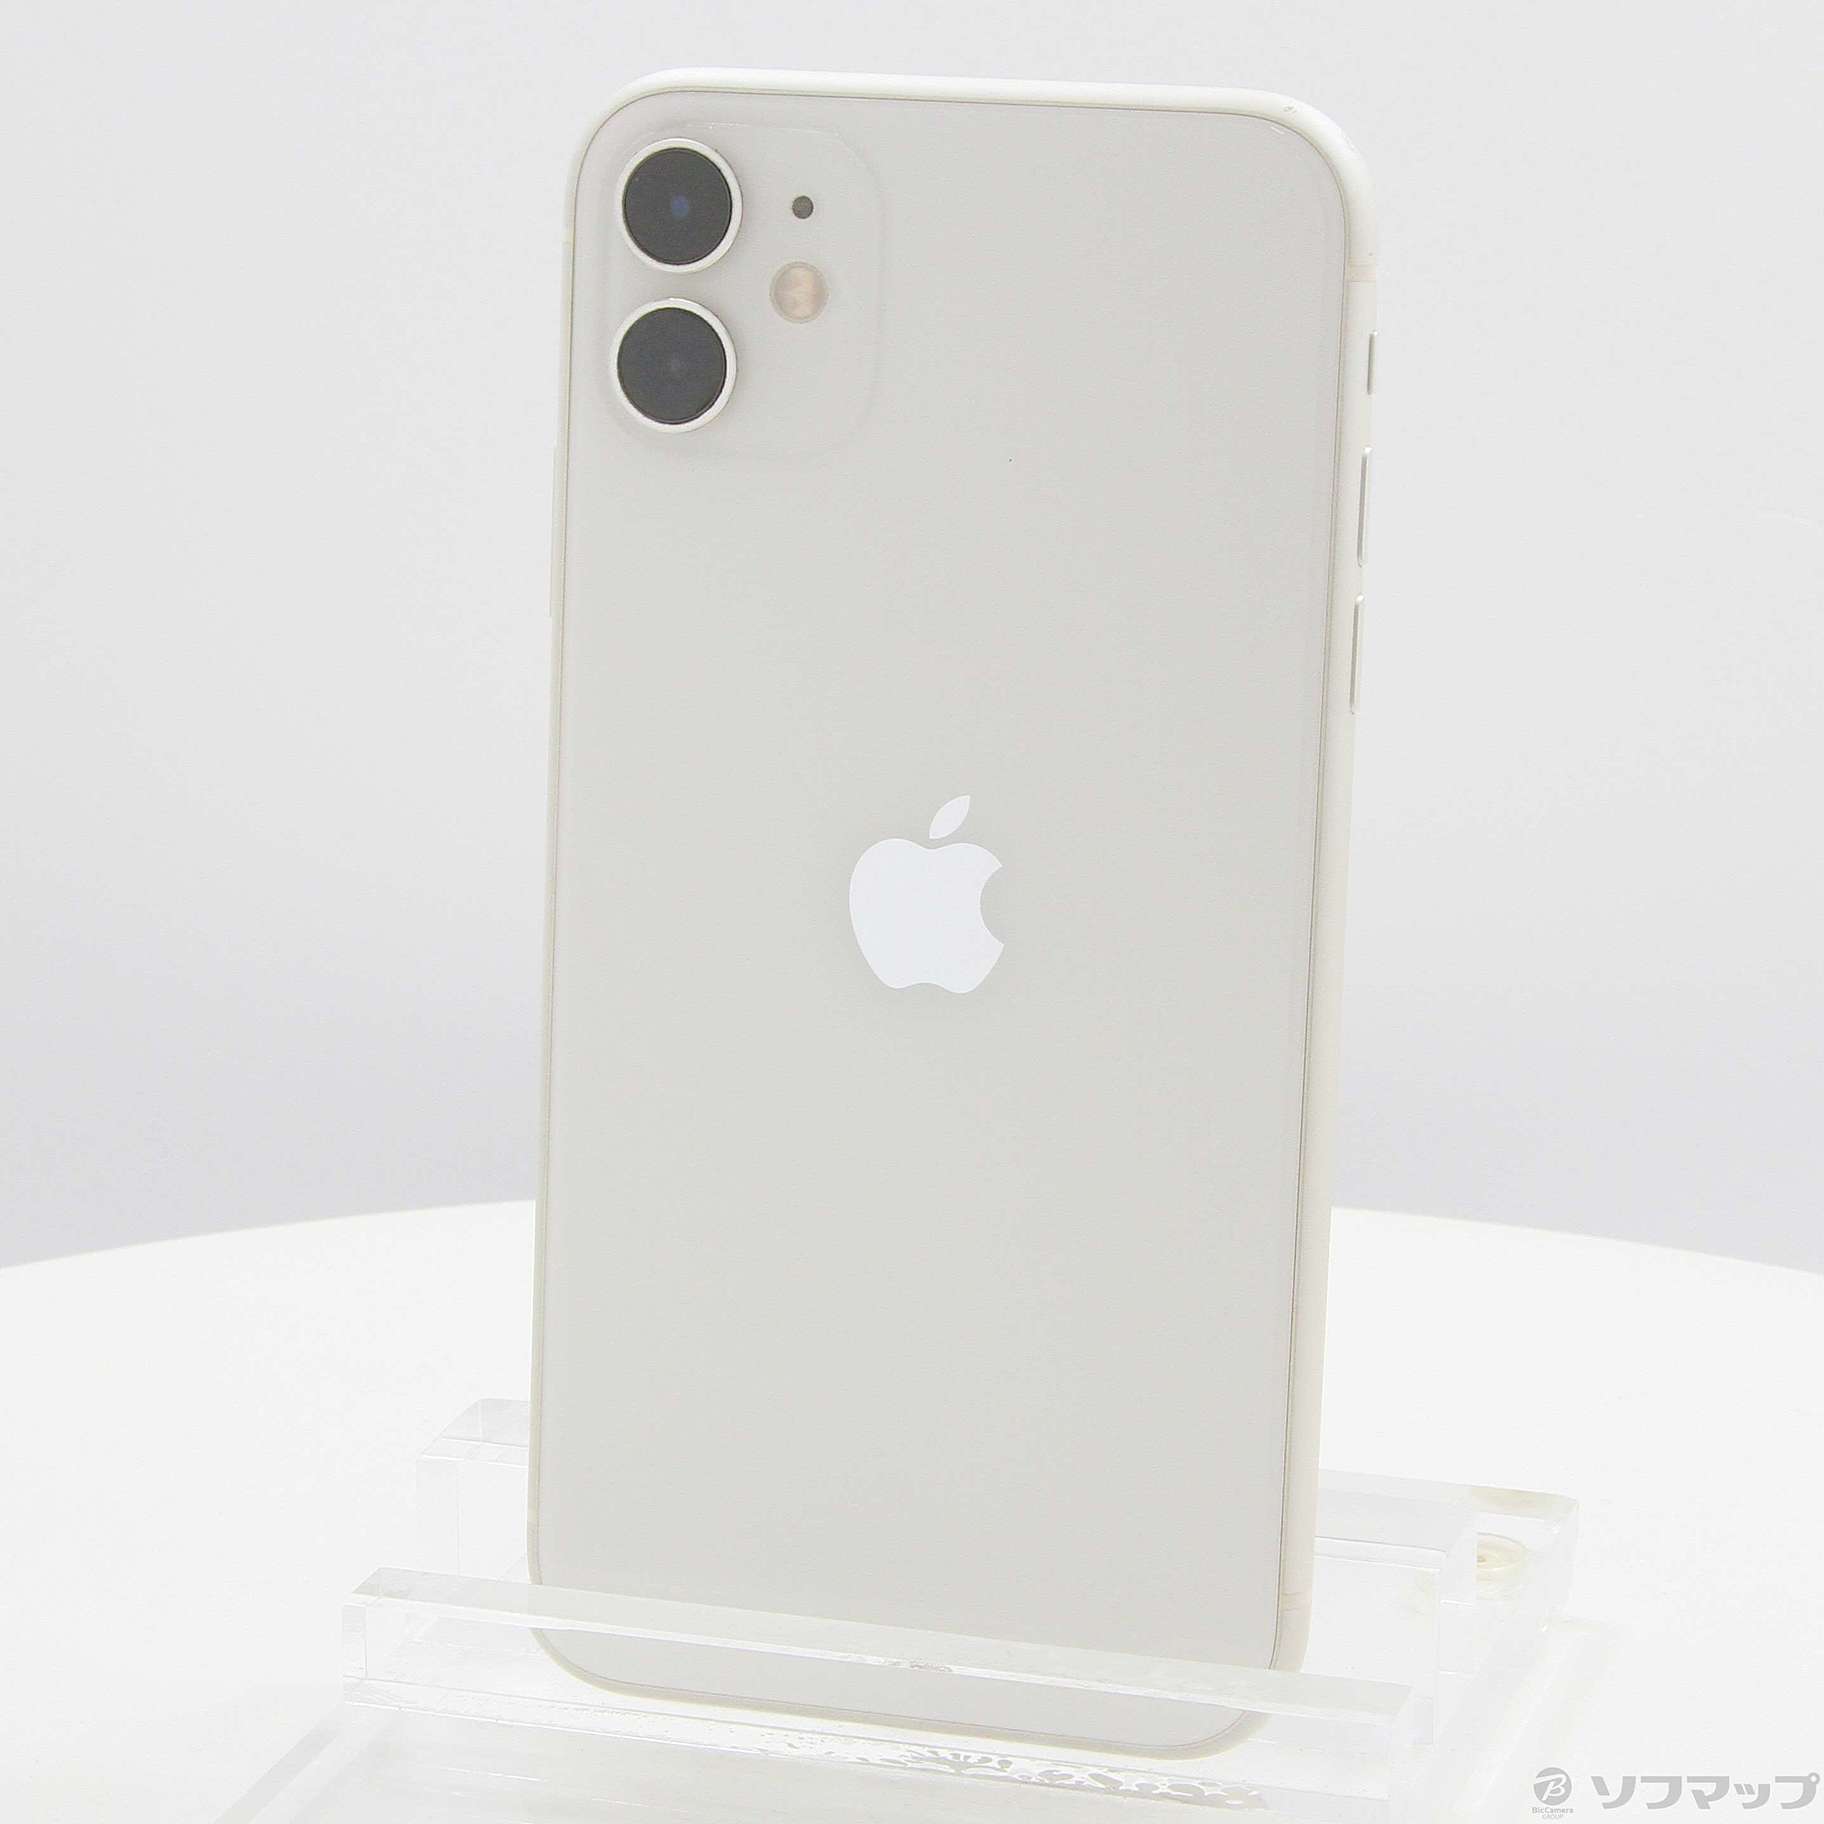 iPhone 11 ホワイト 64GB SIMフリー